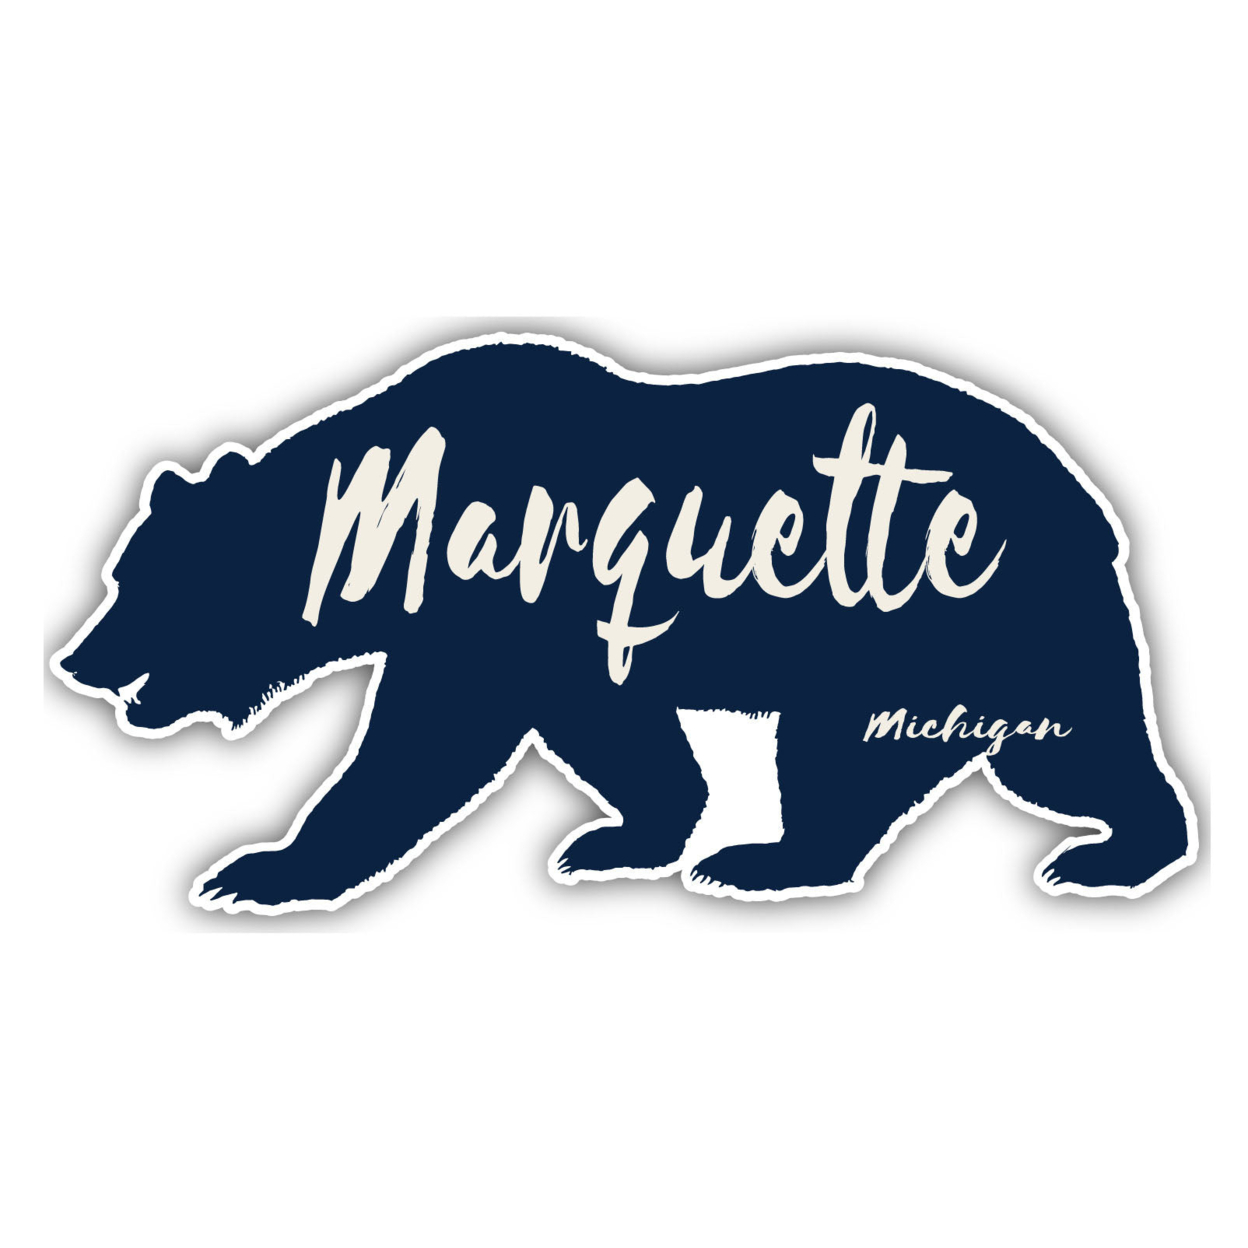 Marquette Michigan Souvenir Decorative Stickers (Choose Theme And Size) - 2-Inch, Bear